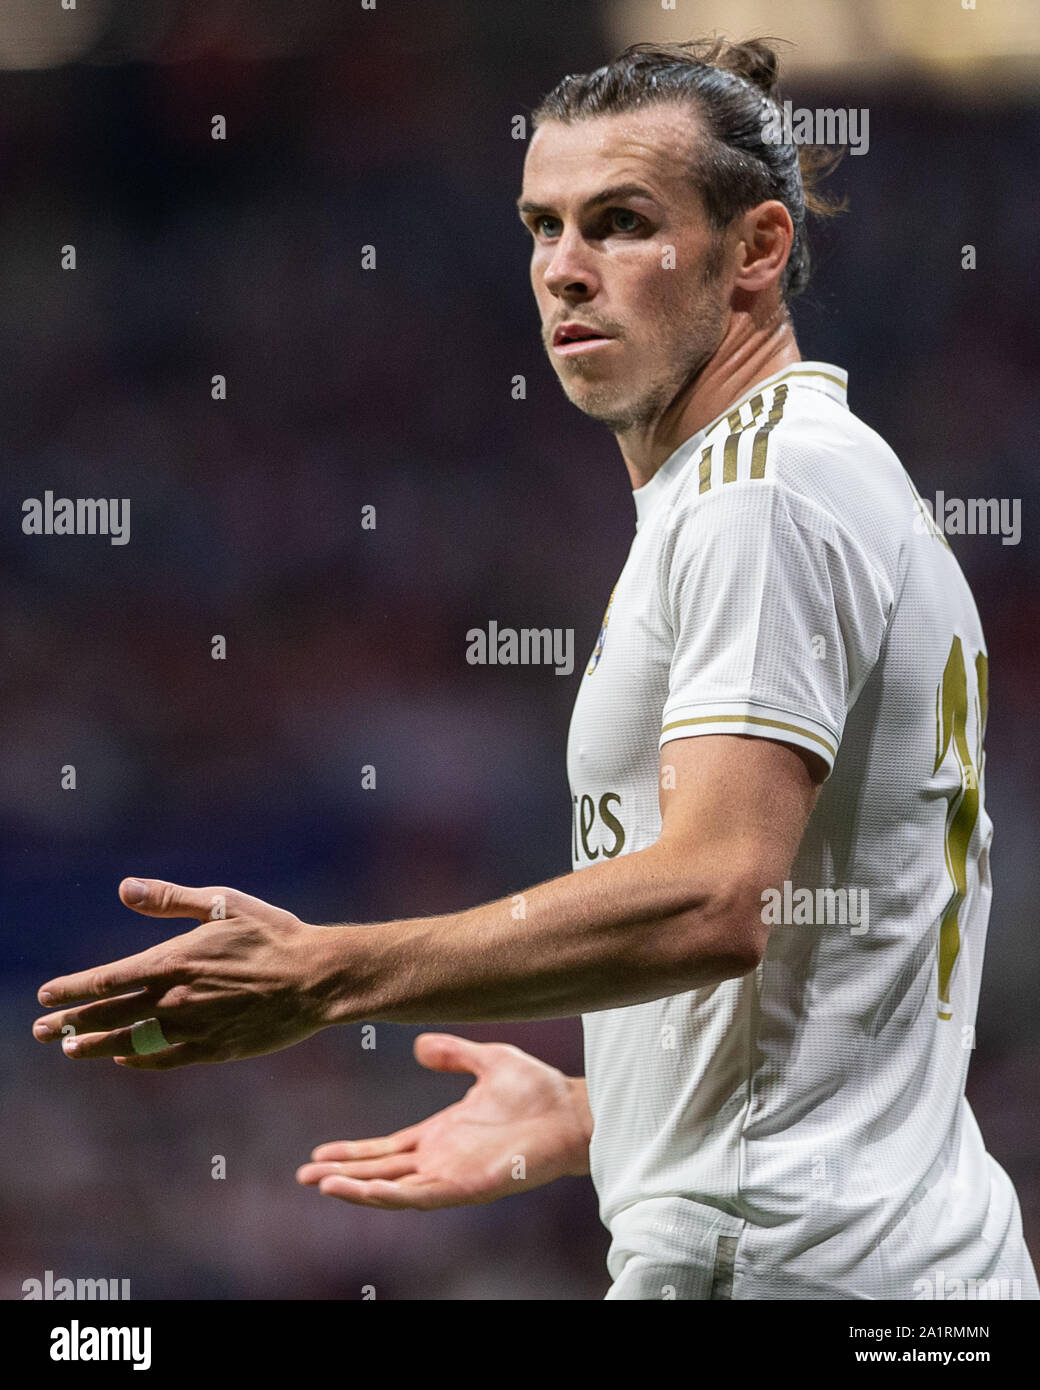 Madrid, Spain. 28th Sep, 2019. Gareth Bale of Real Madridduring the match Atletico de Madrid v Real Madrid CF, of LaLiga 2019/2019 season, date 7. Wanda Metropolitano Stadium. Madrid, Spain, 28 SEP 2019. Credit: PRESSINPHOTO/Alamy Live News Stock Photo